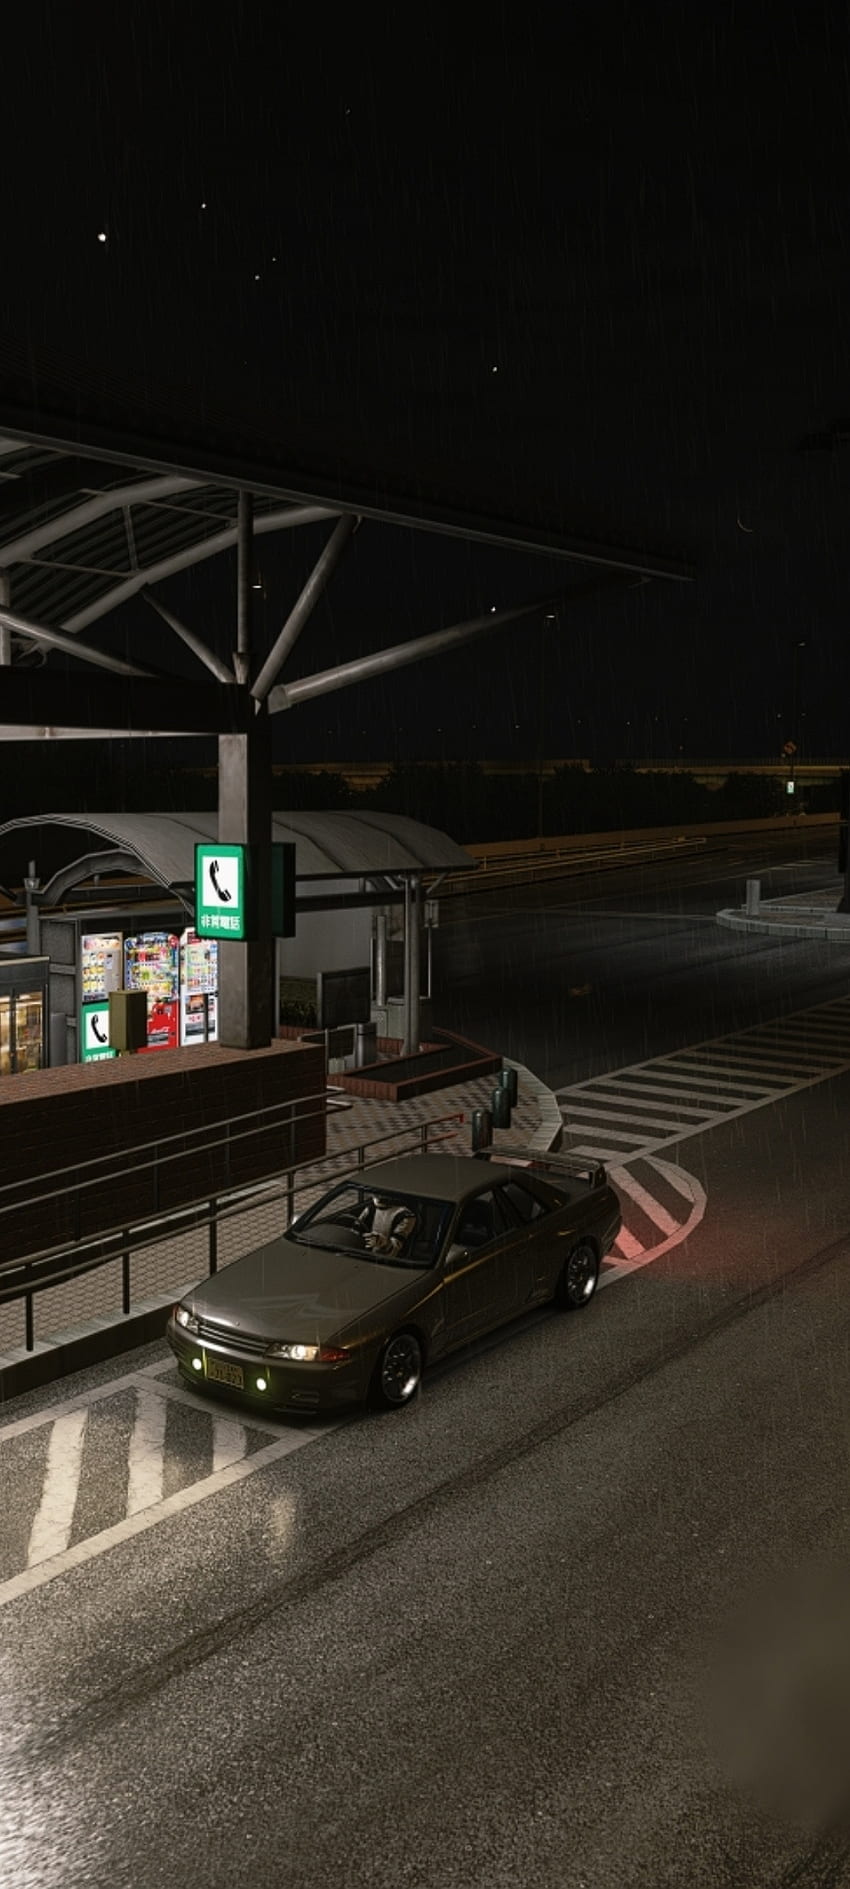 Nissan Skyline GTR R33, 自動車照明, 雨, スカイライン gtr, assetto corsa, 夜, mbd_design, 首都高速道路, ゴジラ HD電話の壁紙